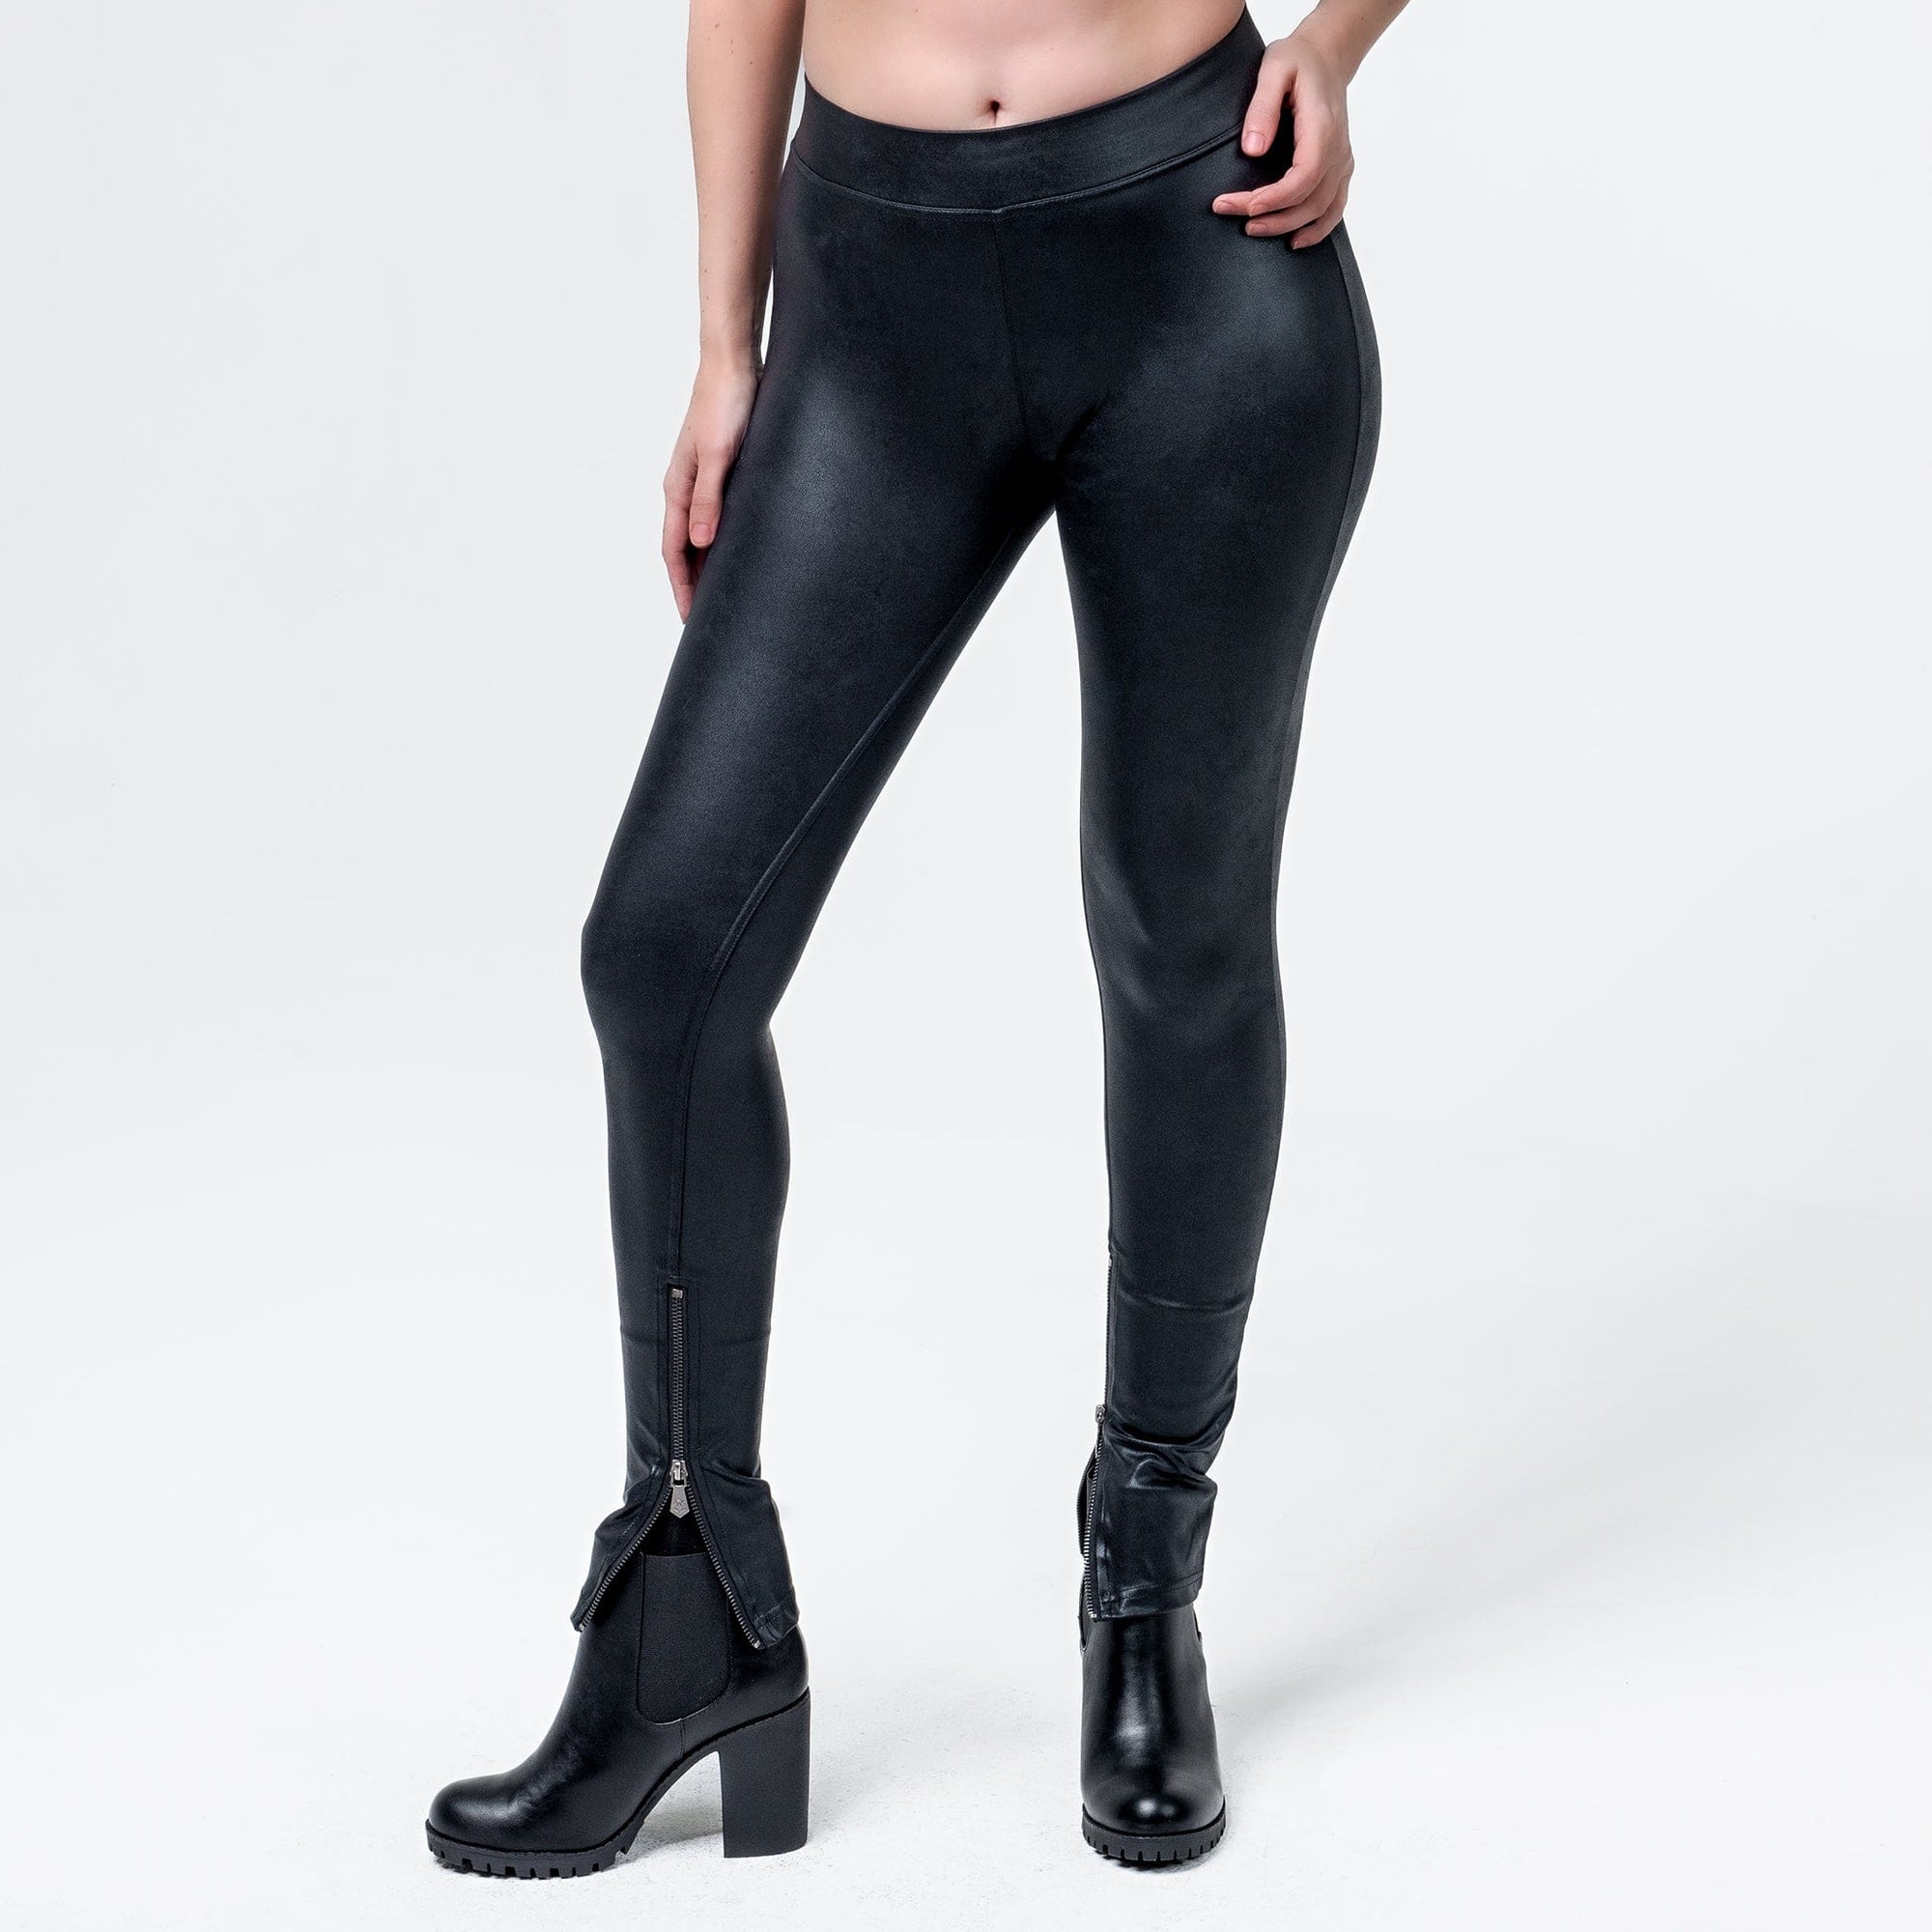 Wornstar Clothing Womens Leggings. Fearless Zipper Leather Leggings - Black